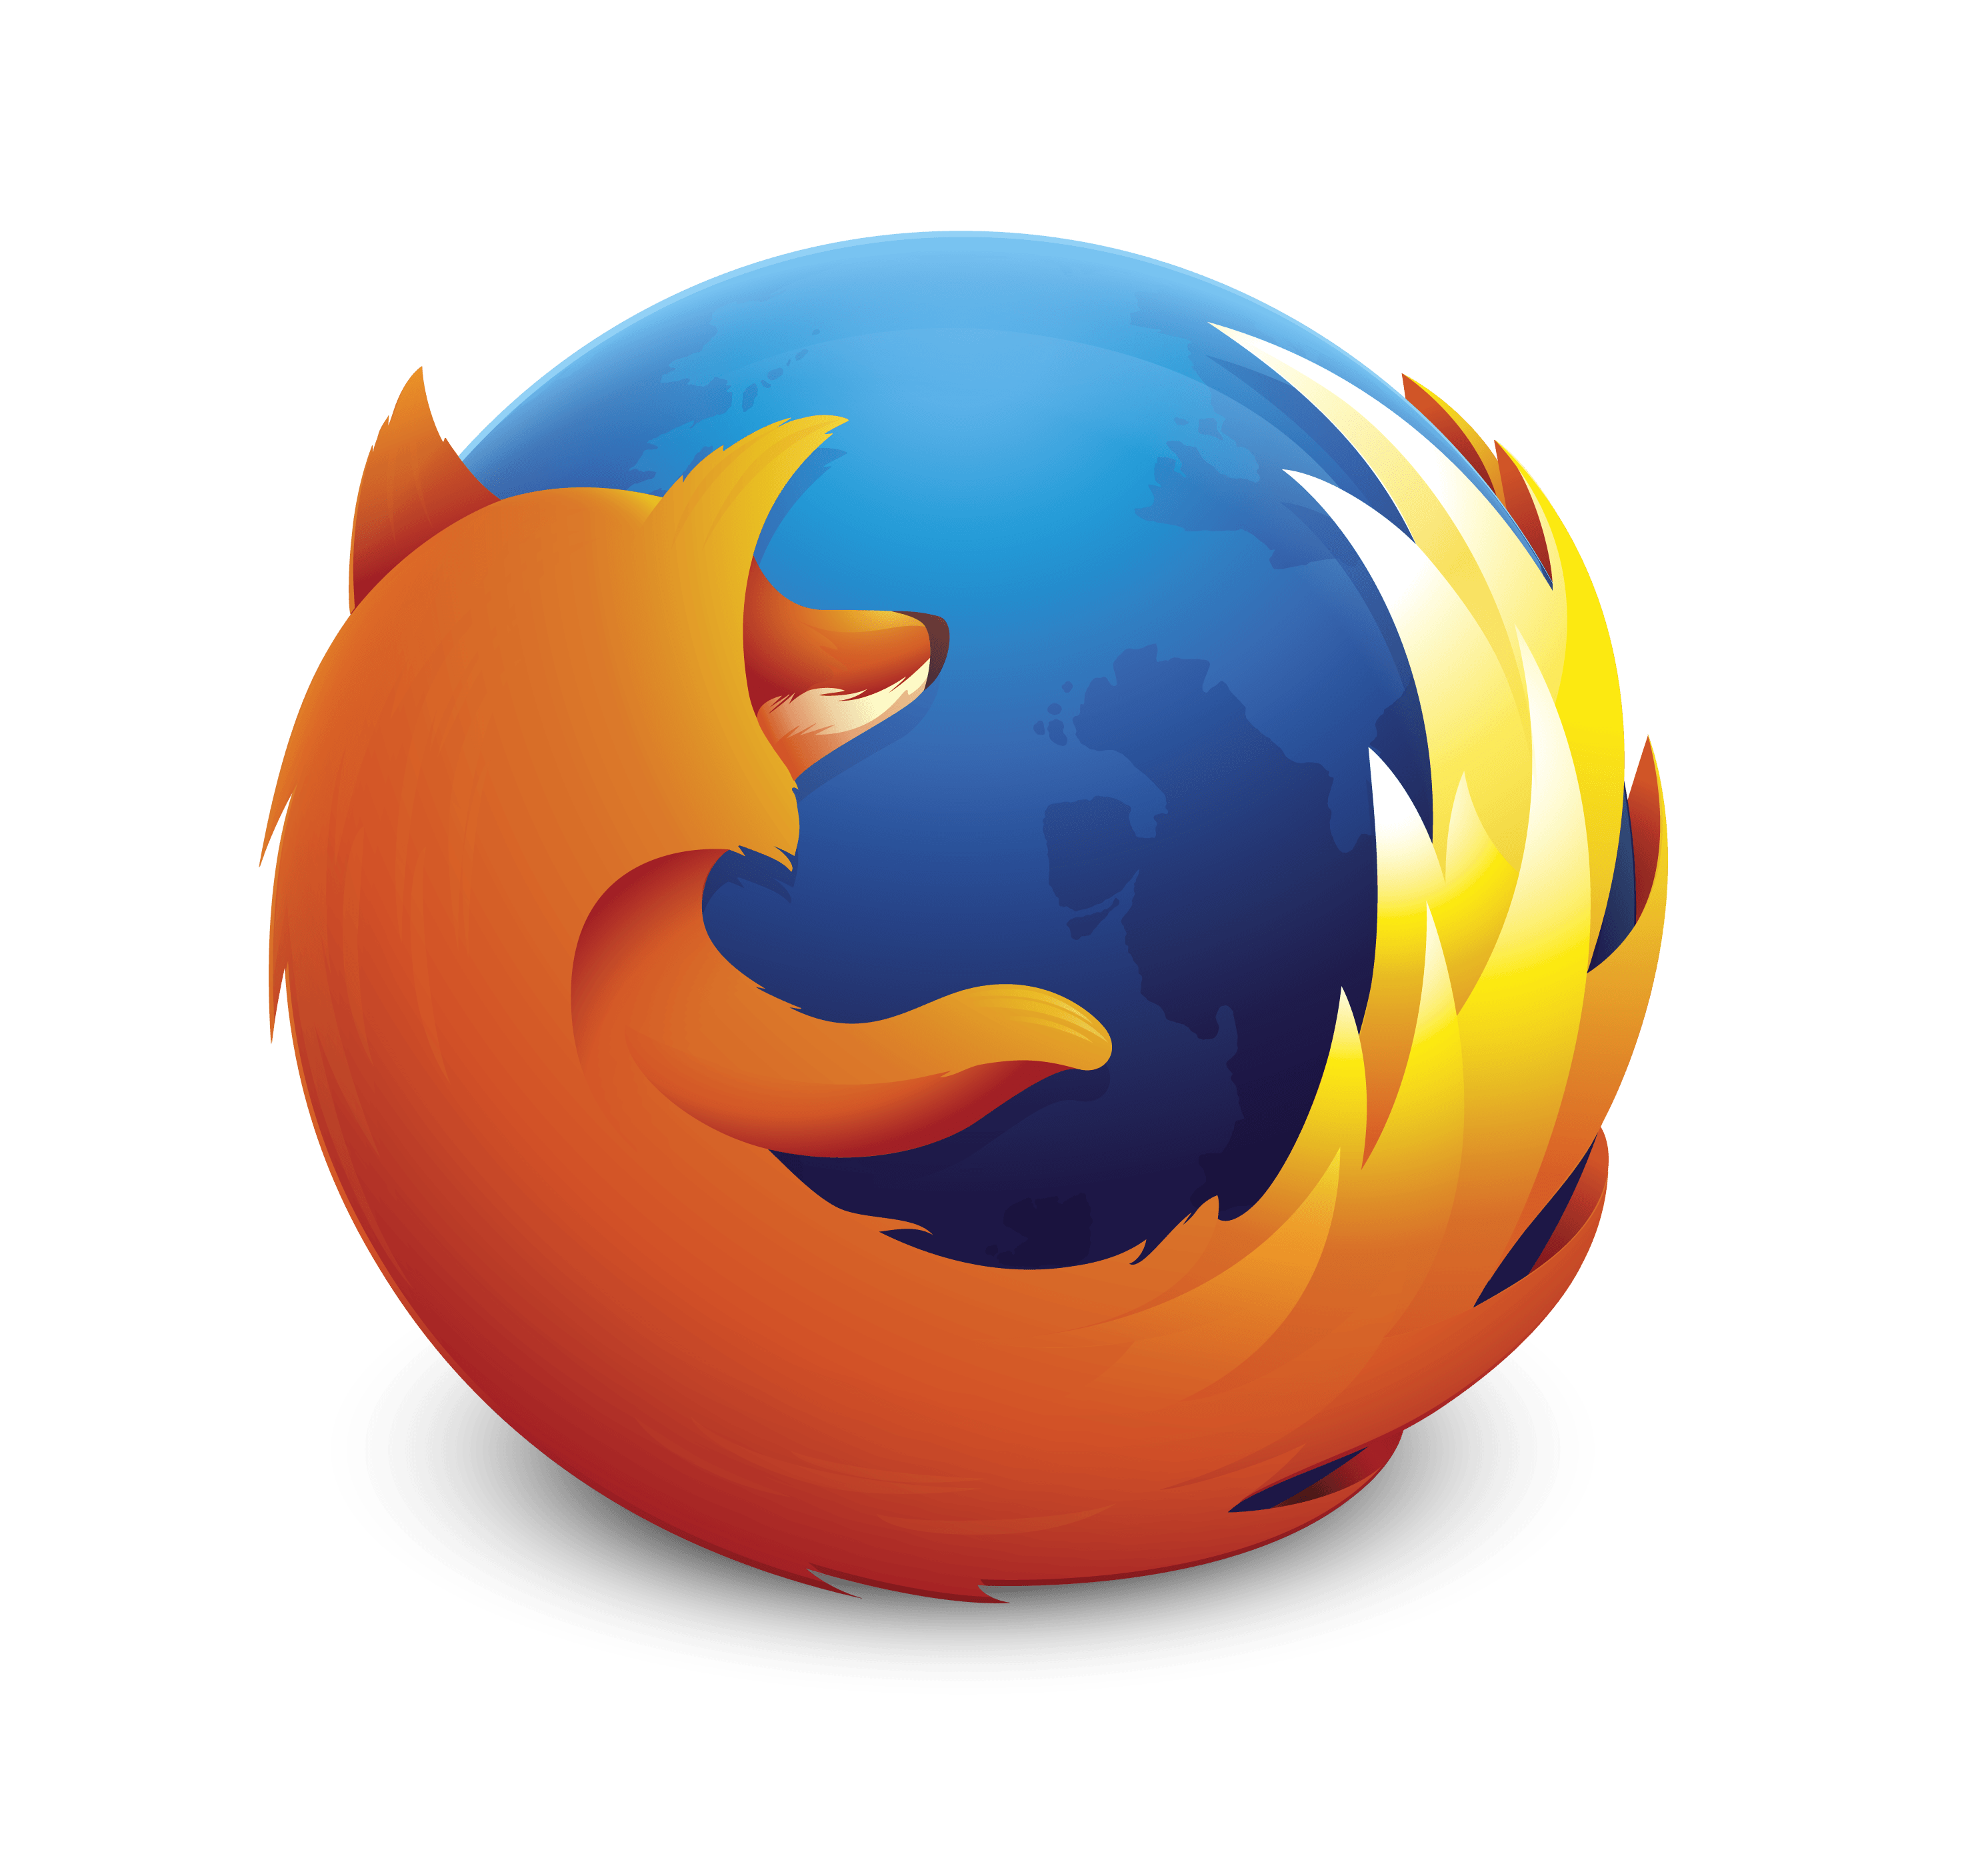 Firefox Wallpapers